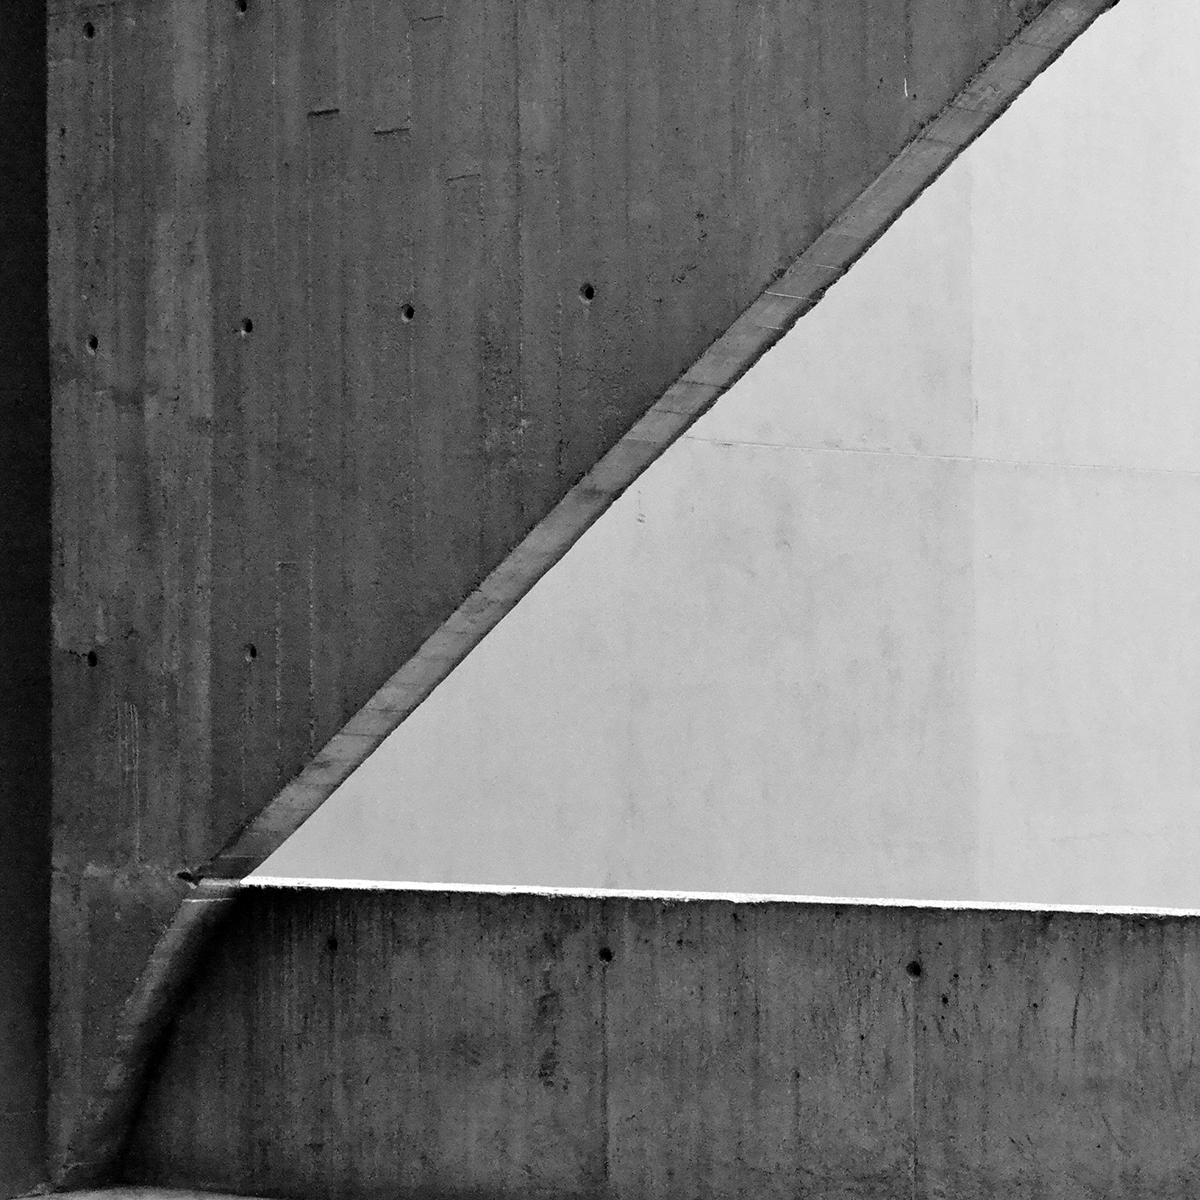 blackandwhite tomieohtake saopaulo Brasil greysscale monotone visualarts arts geometry shape texture digital modern contemporary contemporaryart